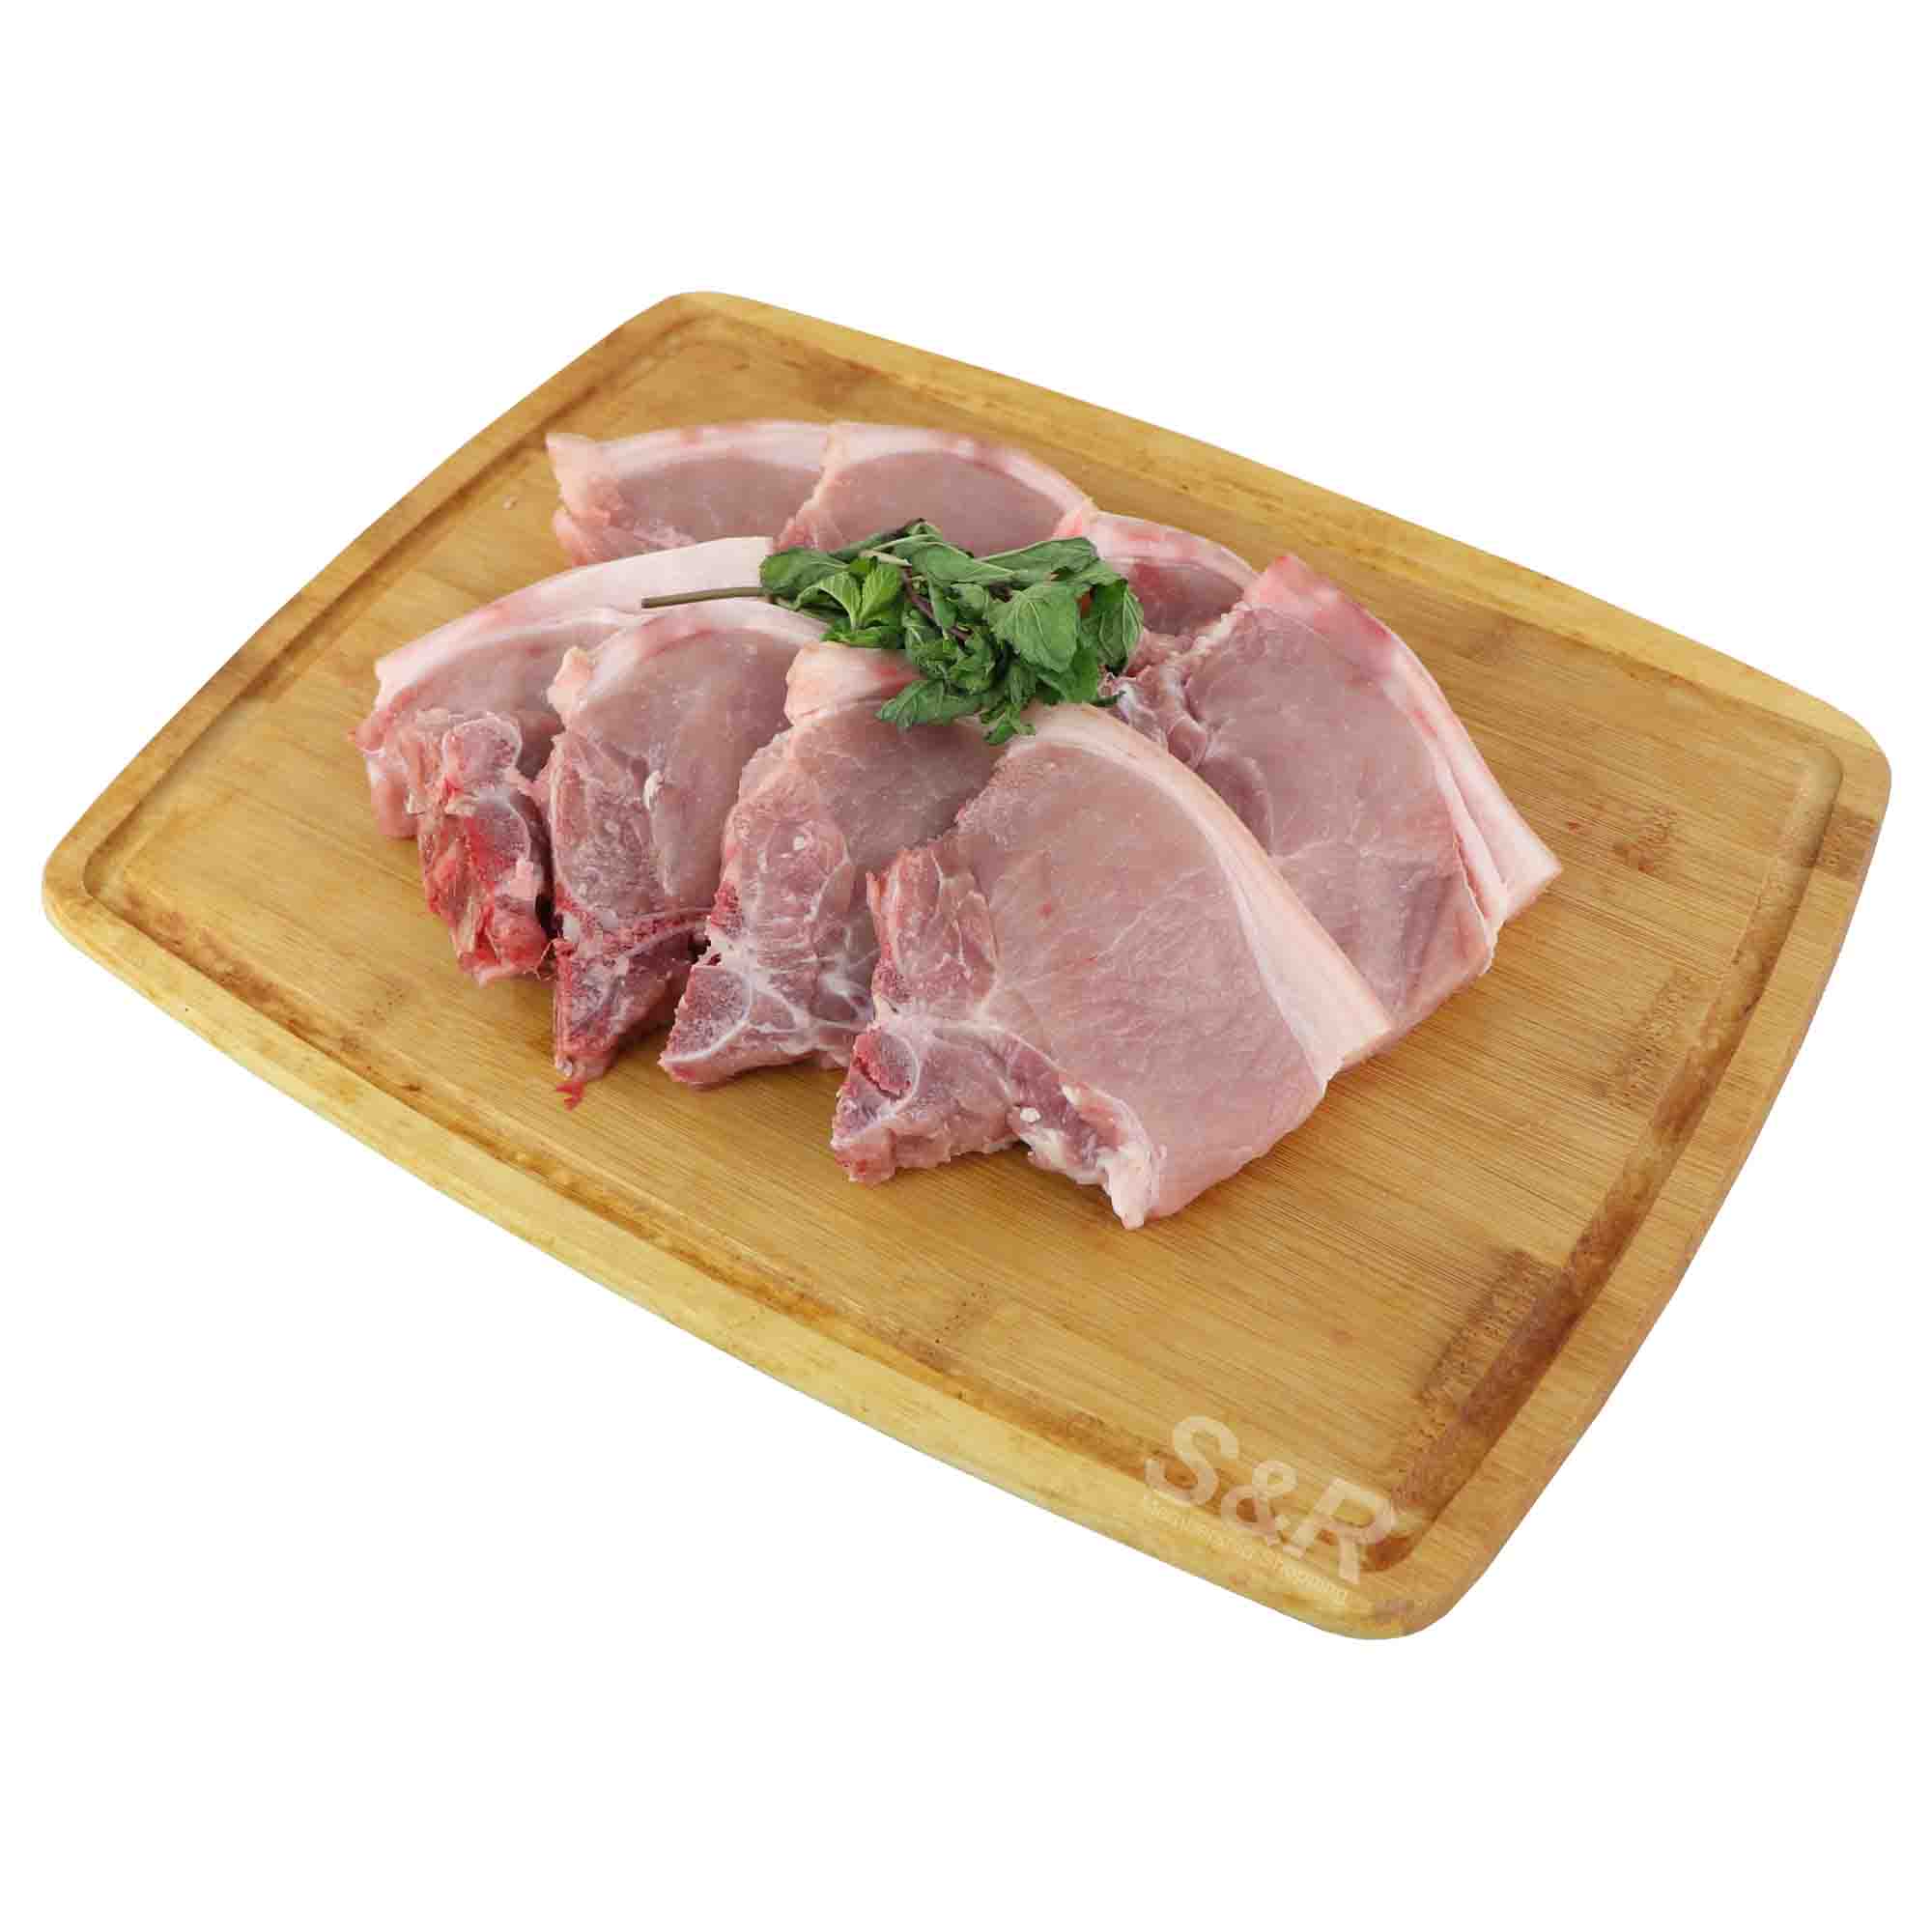 S&R Pork Chops Skin-On approx. 1.6kg